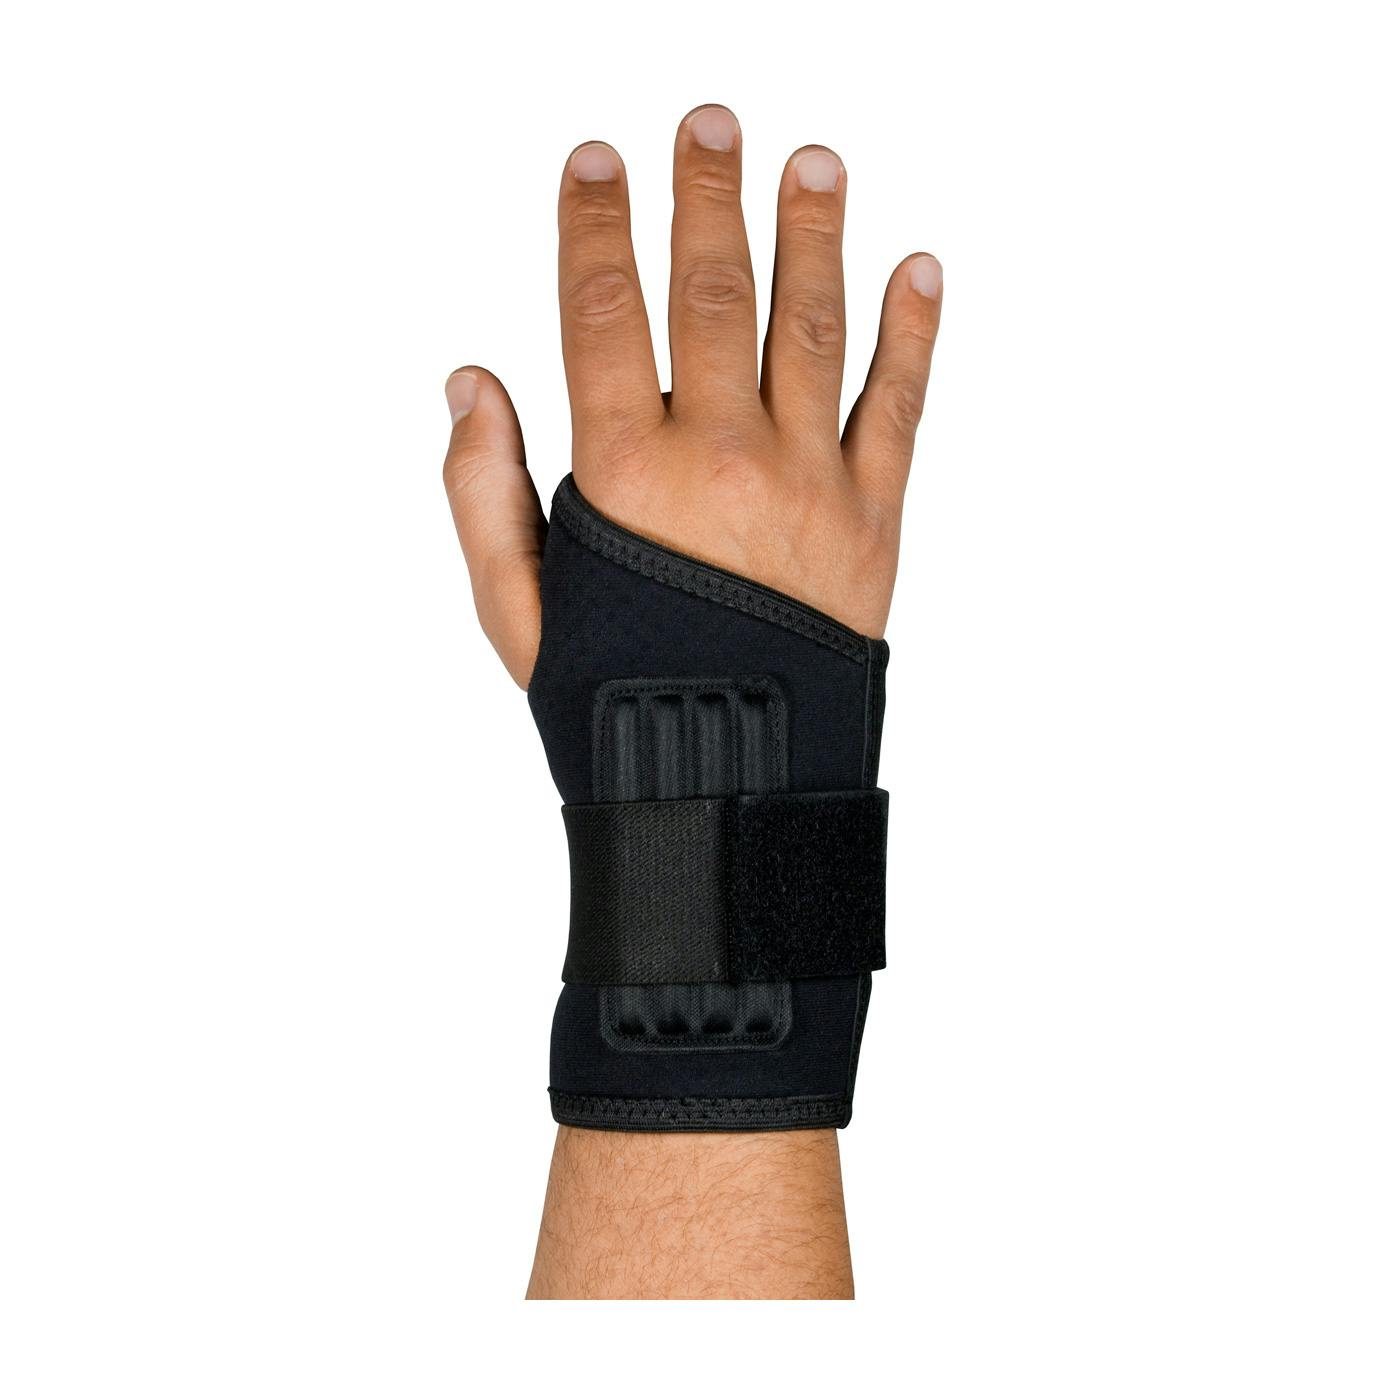 Single Wrap Ambidextrous Wrist Support, Black (290-9013)